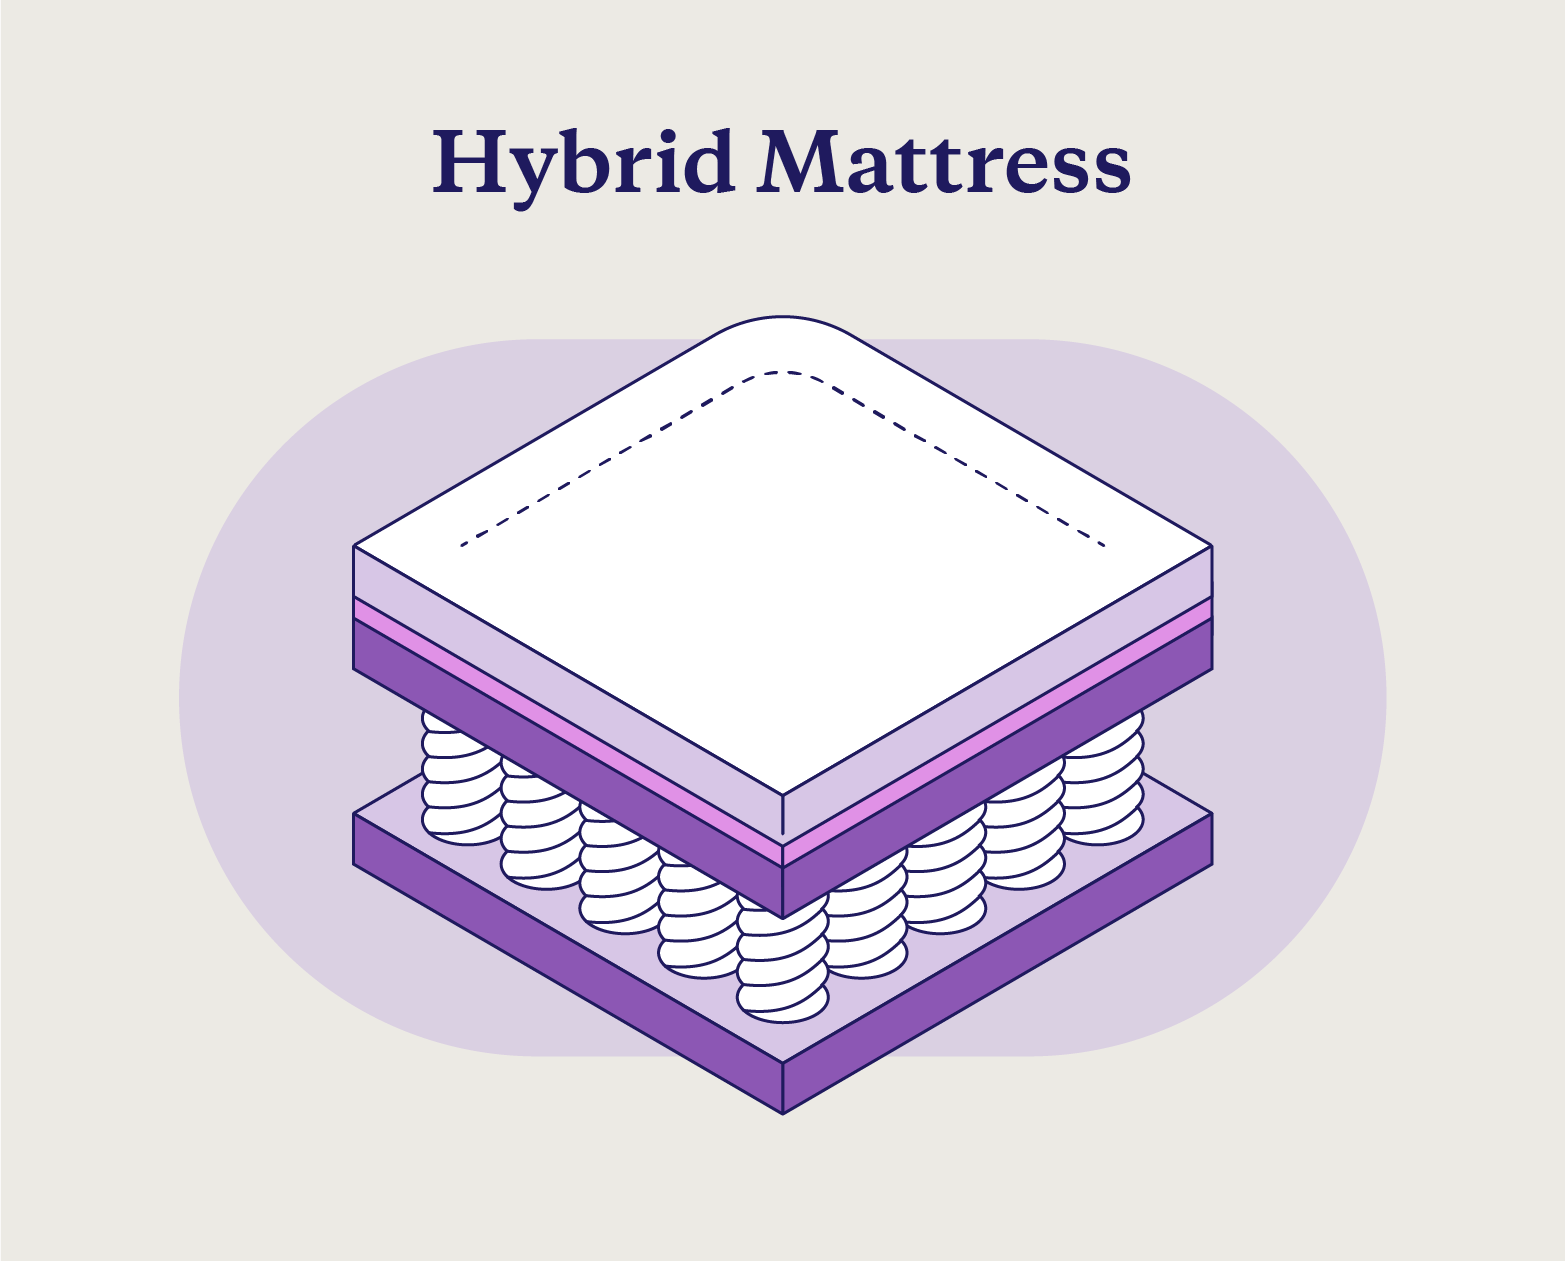 The layers of a hybrid mattress